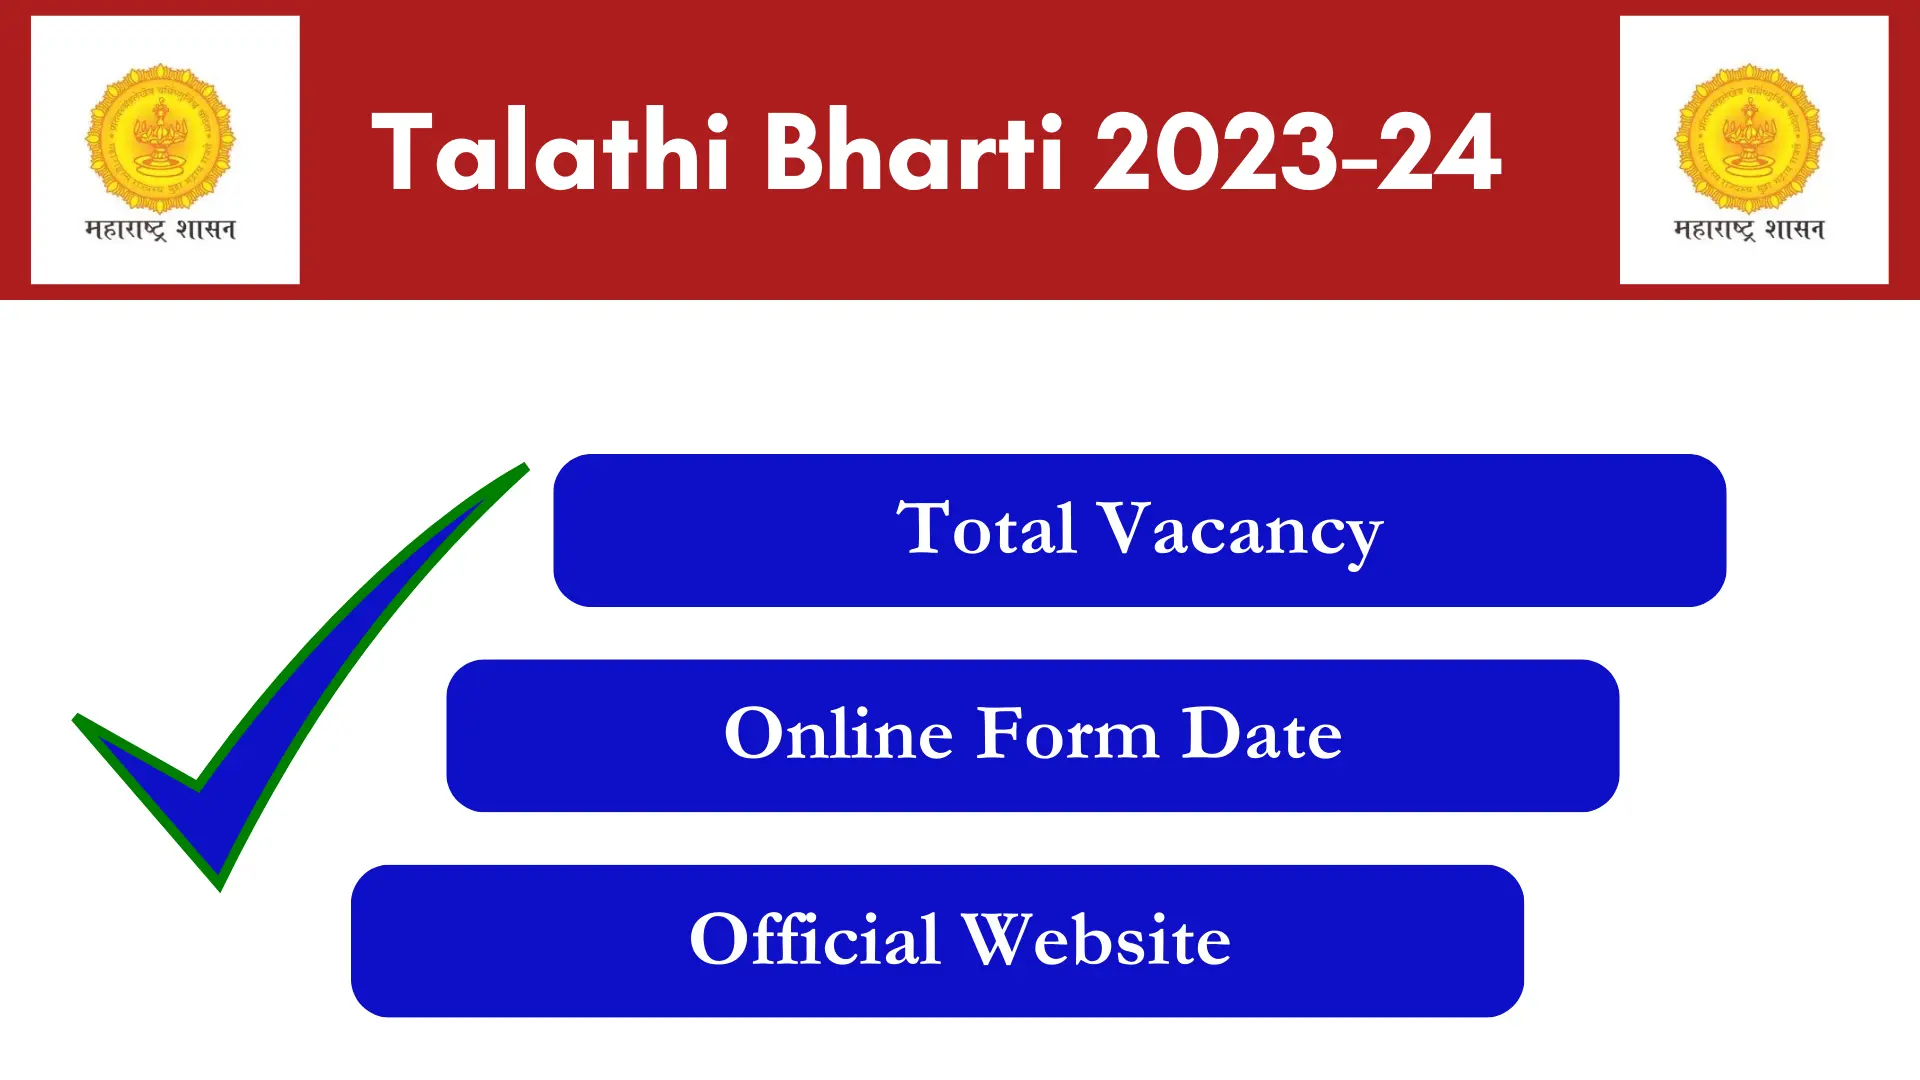 Talathi Bharti 2023 Online Form Date